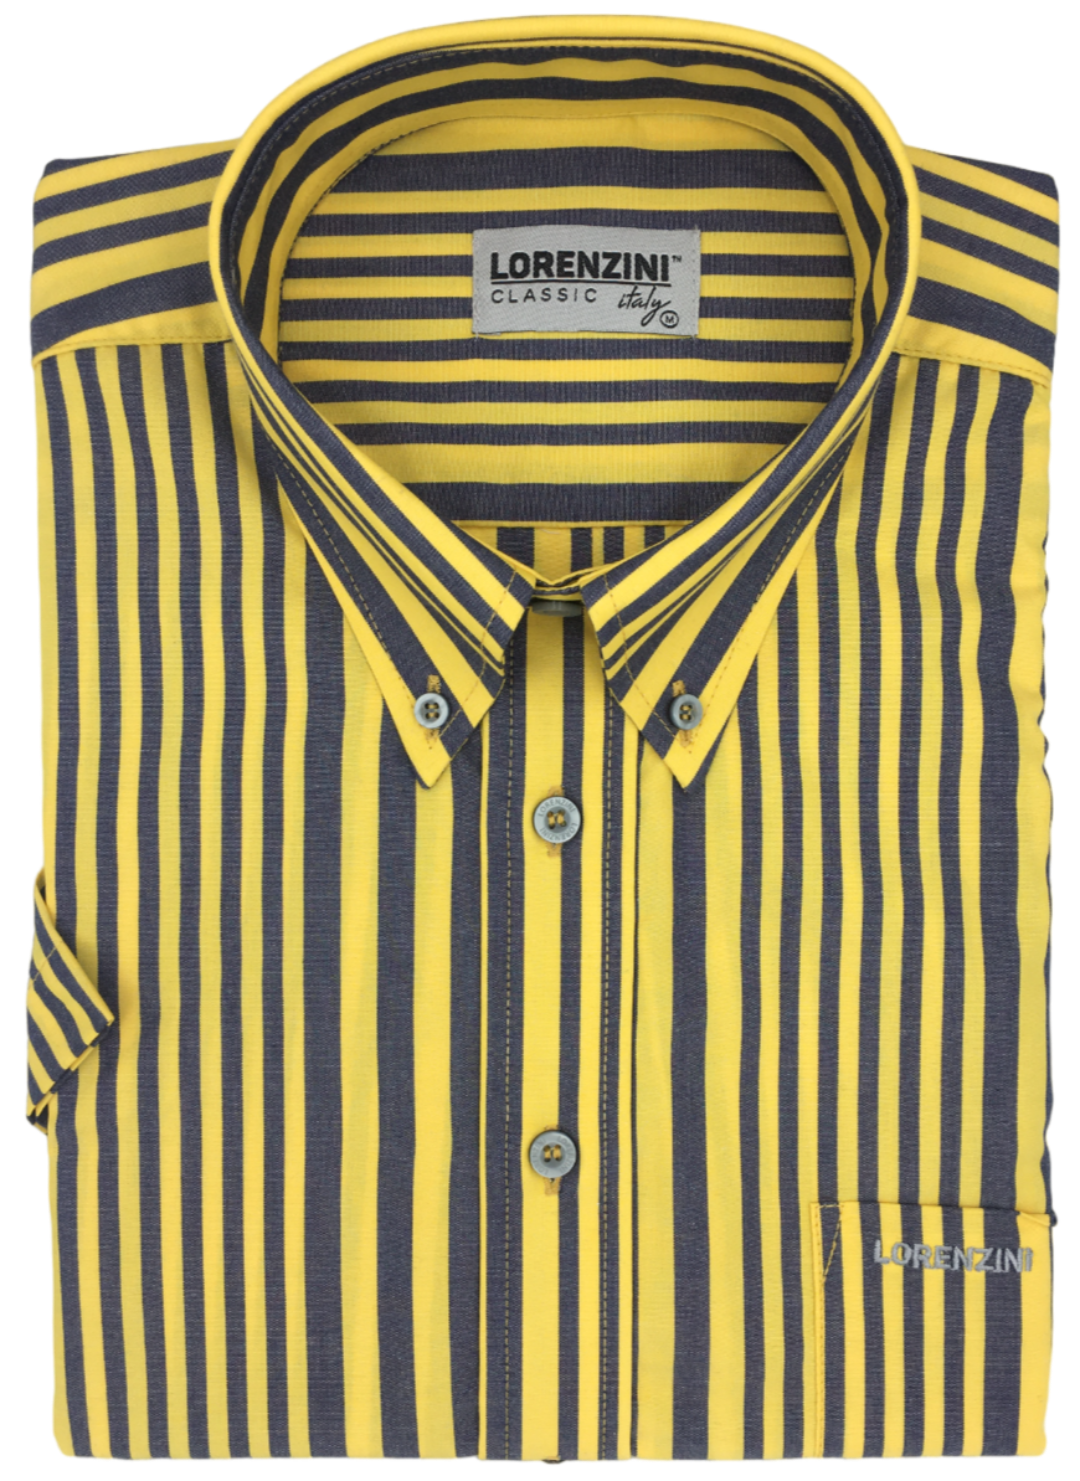 Lorenzini Classic Short Sleeve Yellow Stripe Shirt